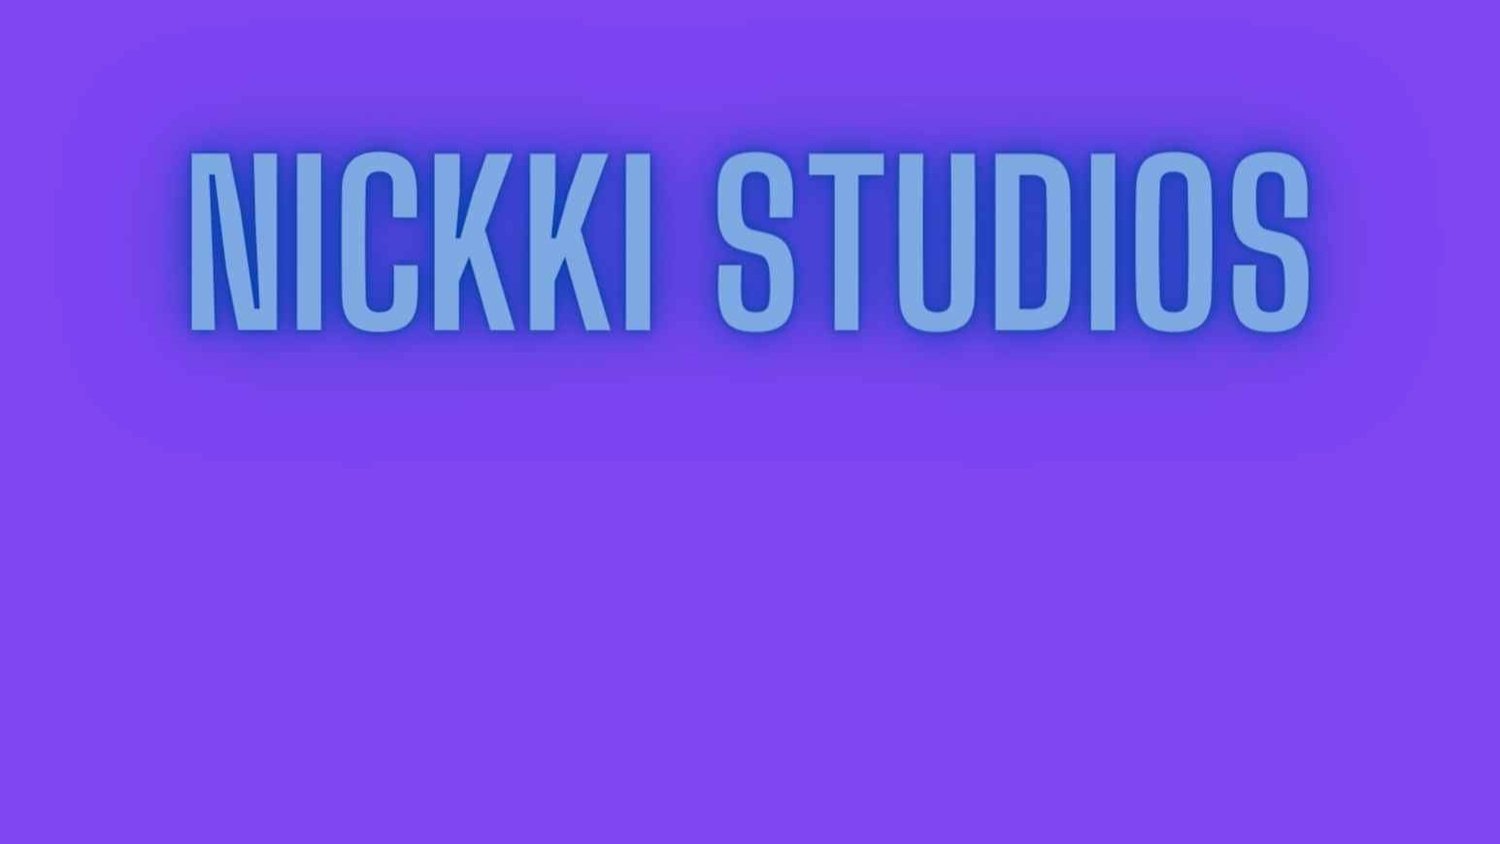 Nickki Studios